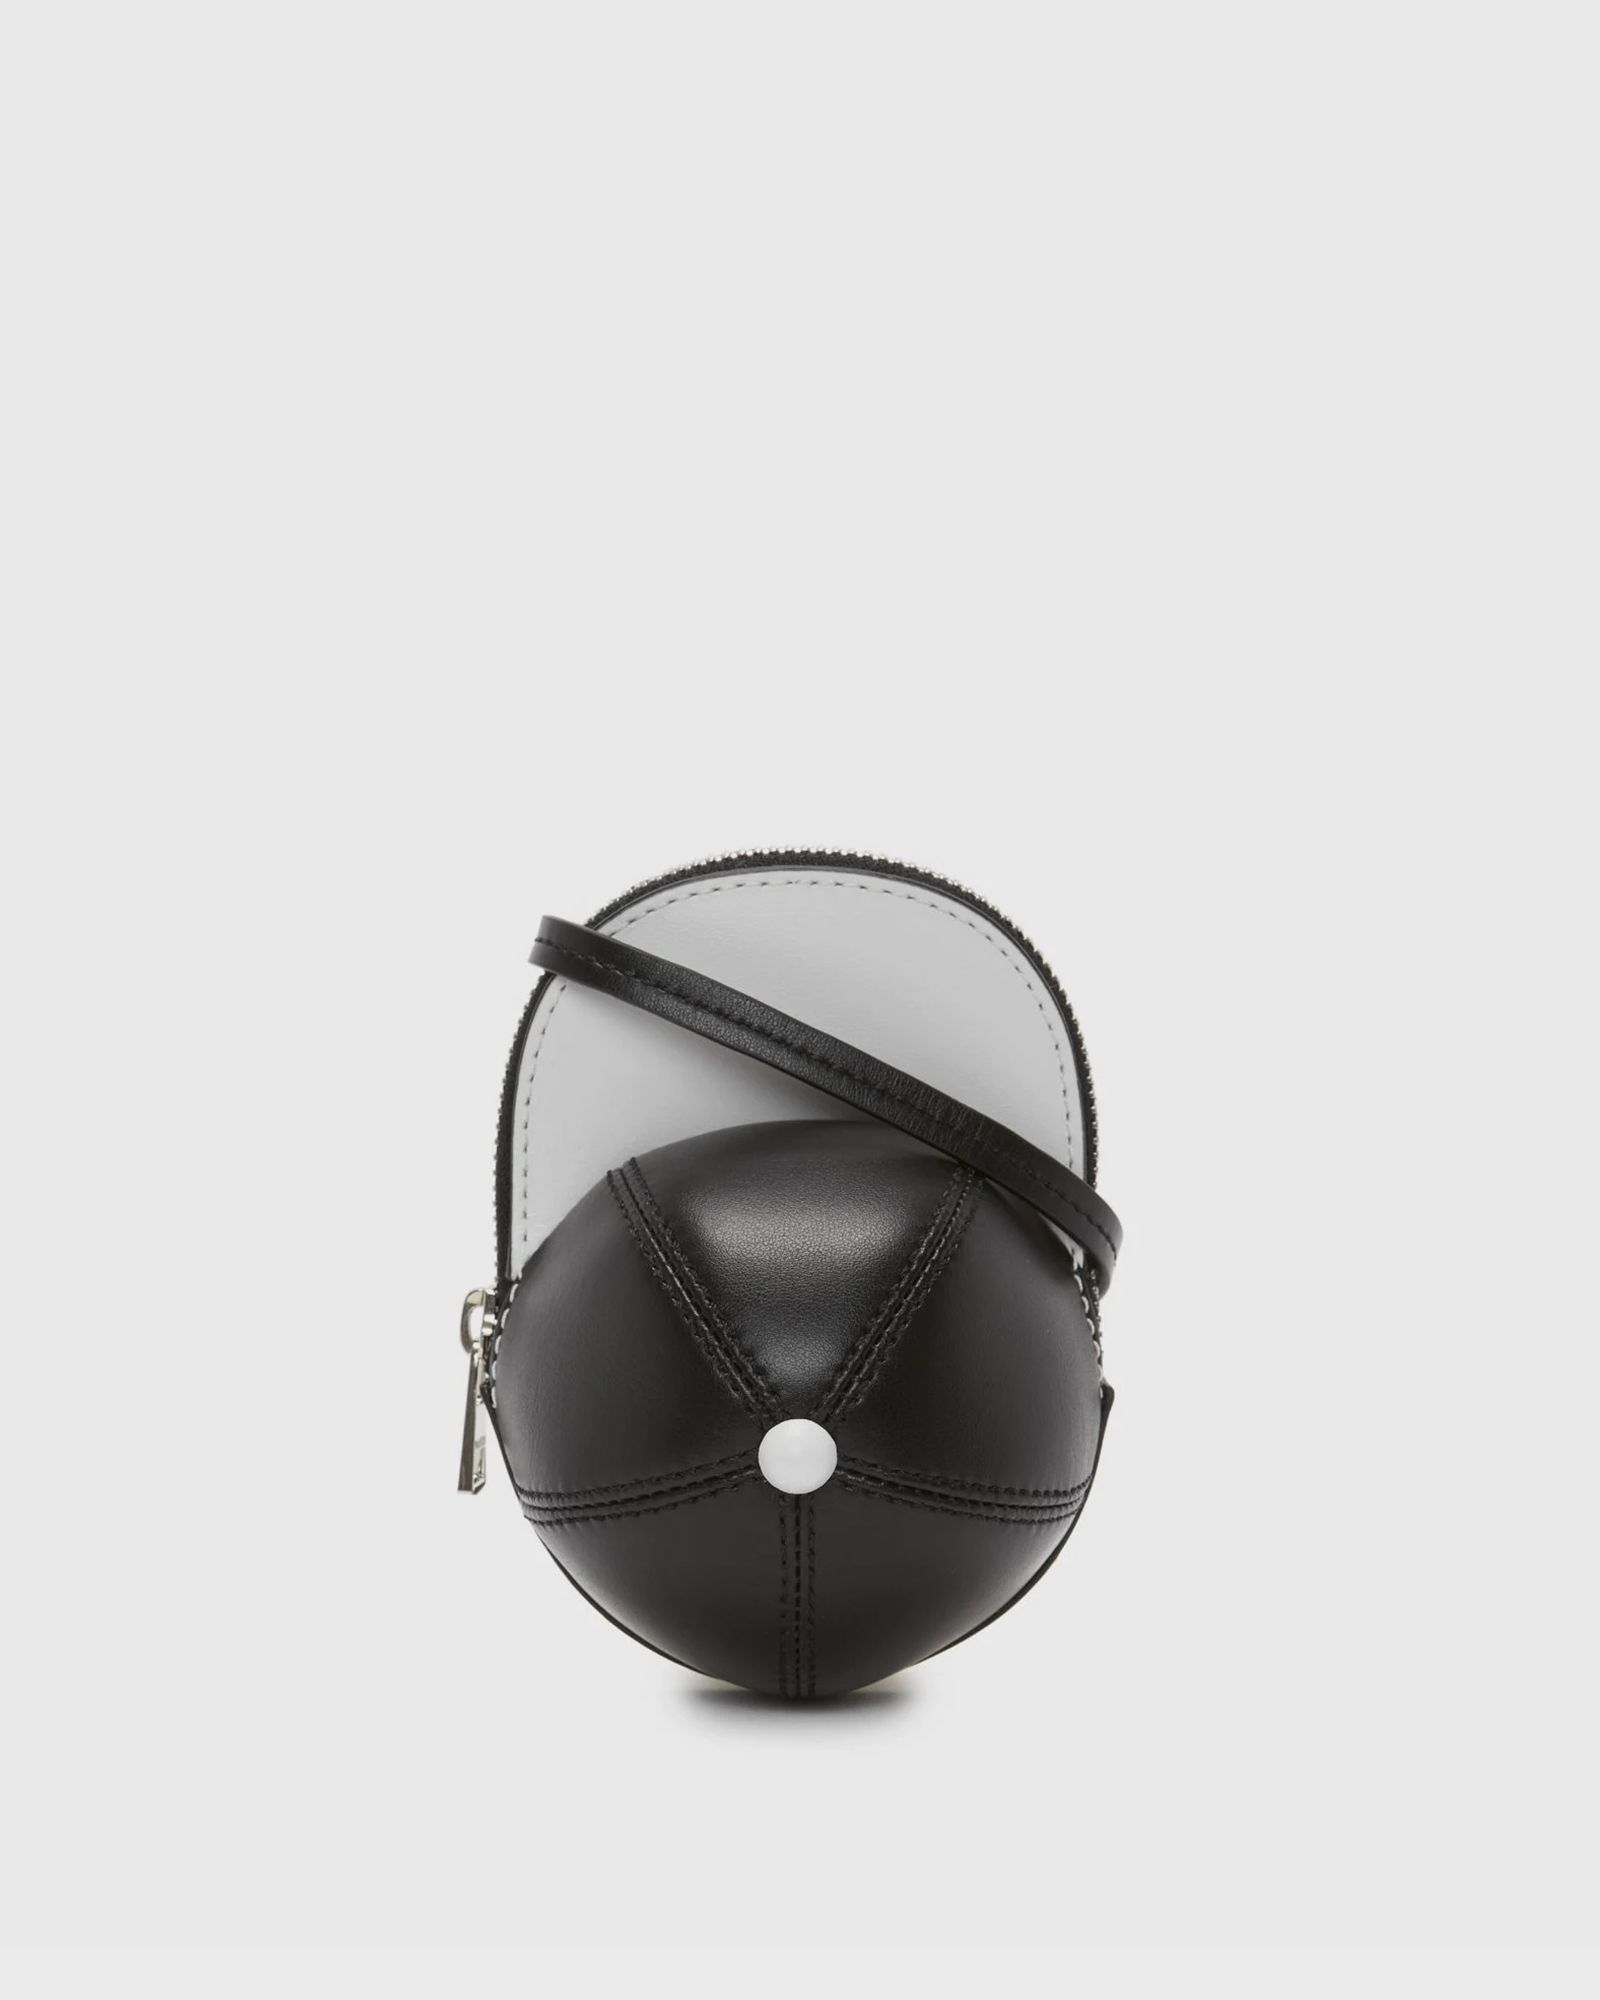 JW Anderson - nano cap bag men messenger & crossbody bags black|white in größe:one size